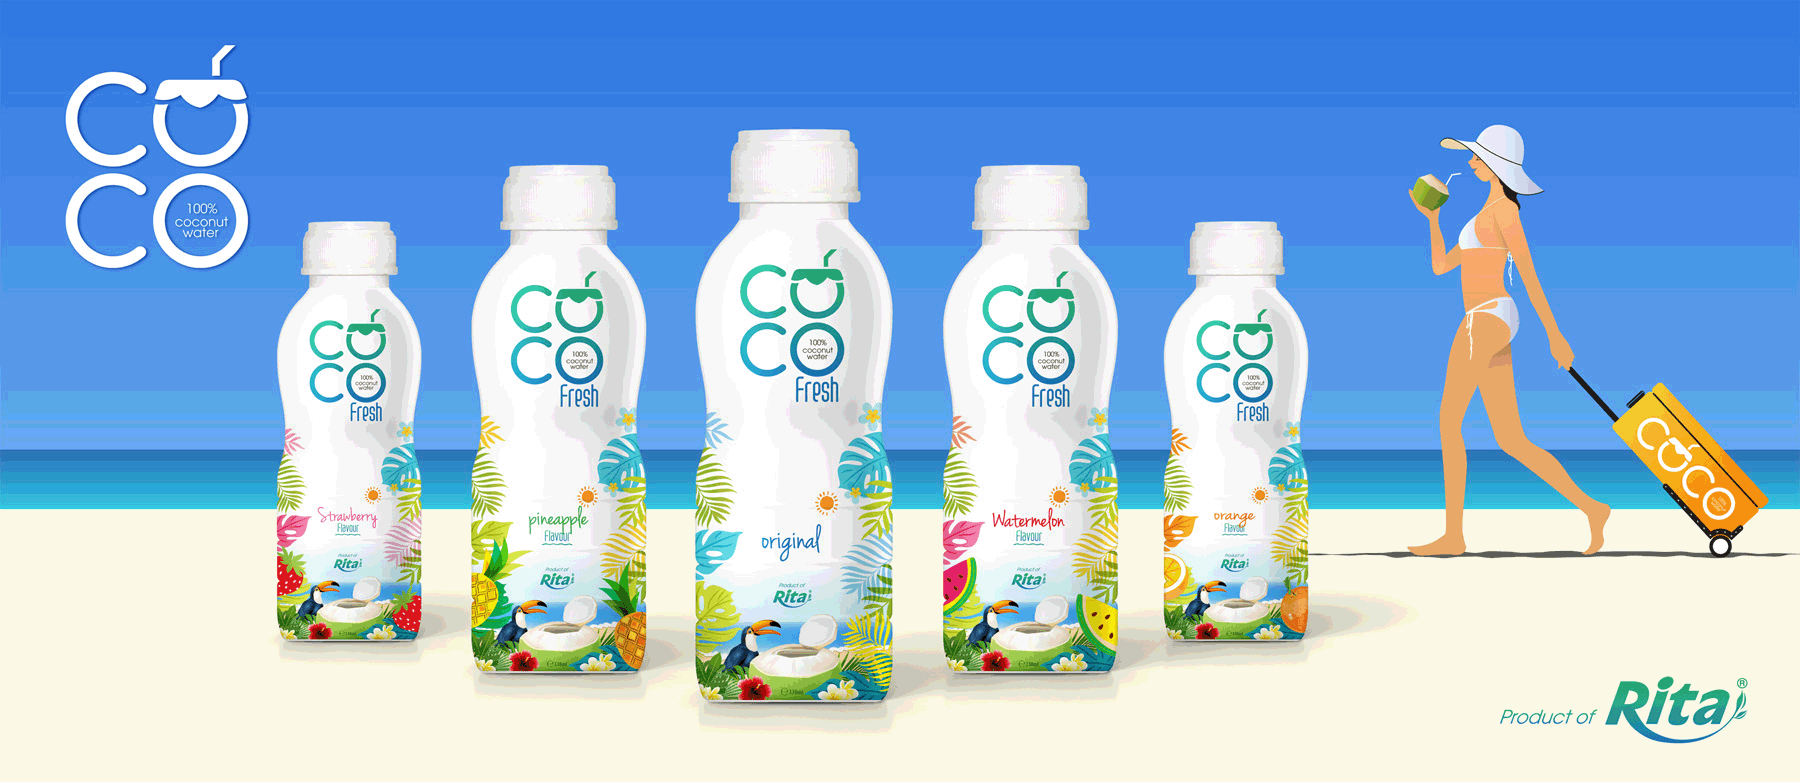 Design Coco 330ml PP Bottle copy